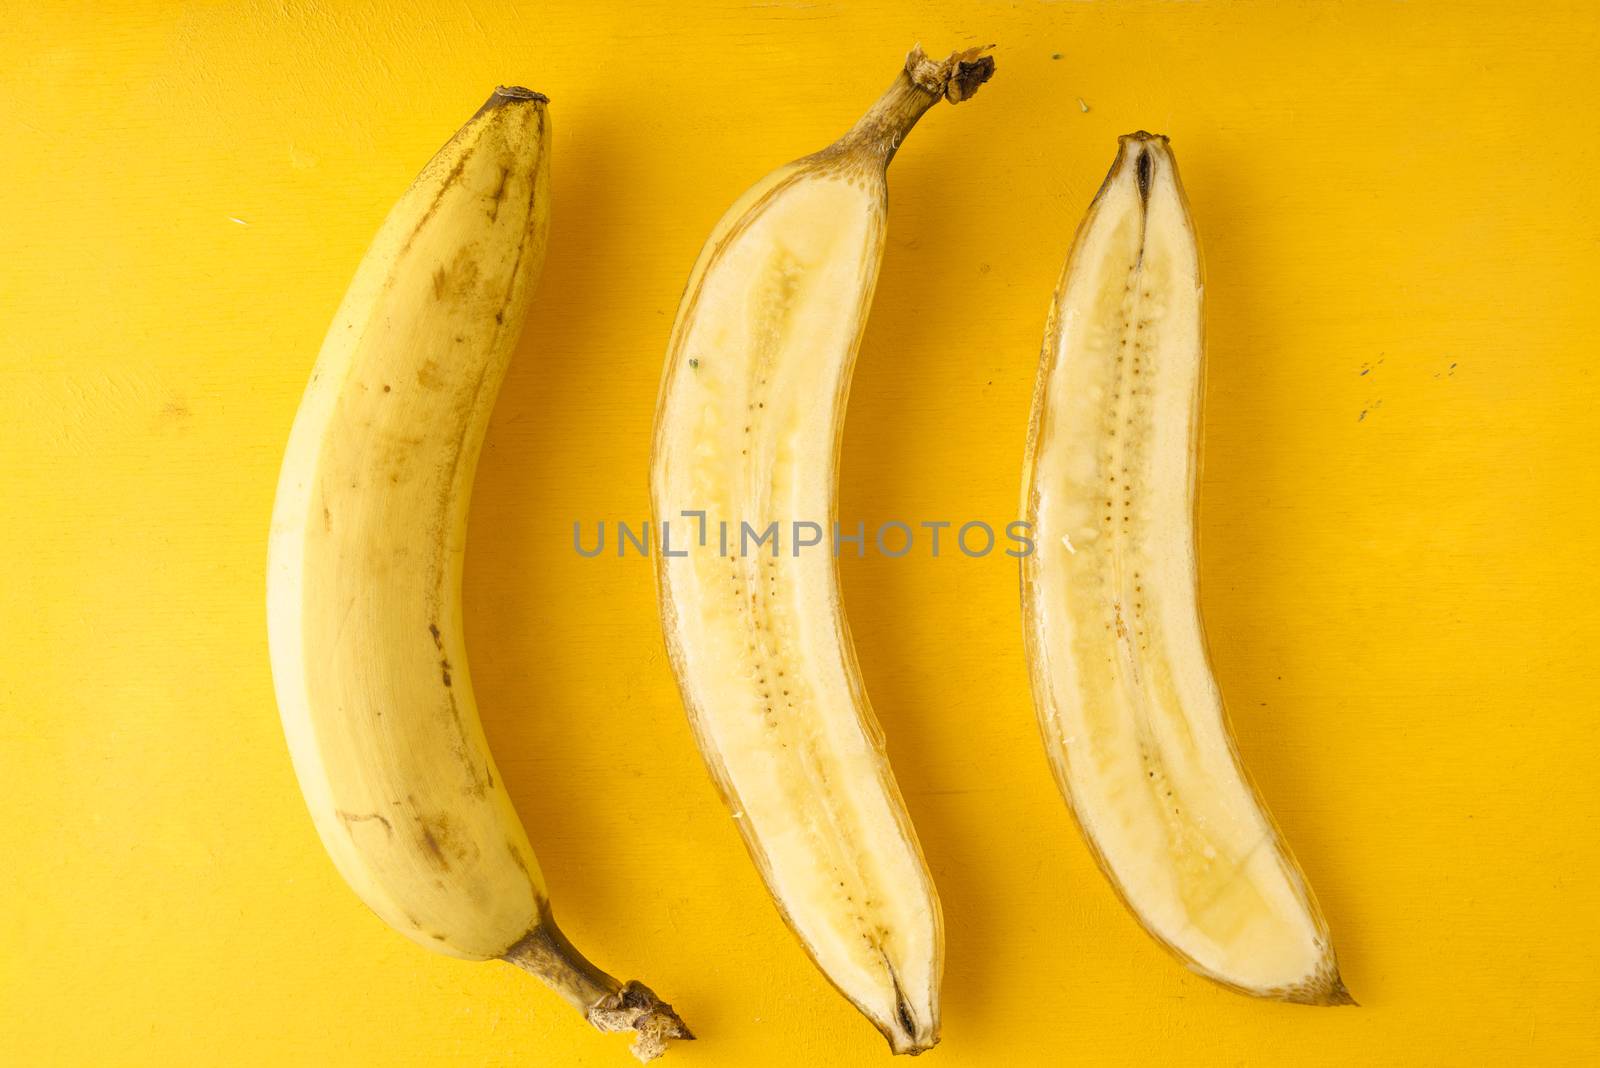 Bananas on a yellow background horizontal